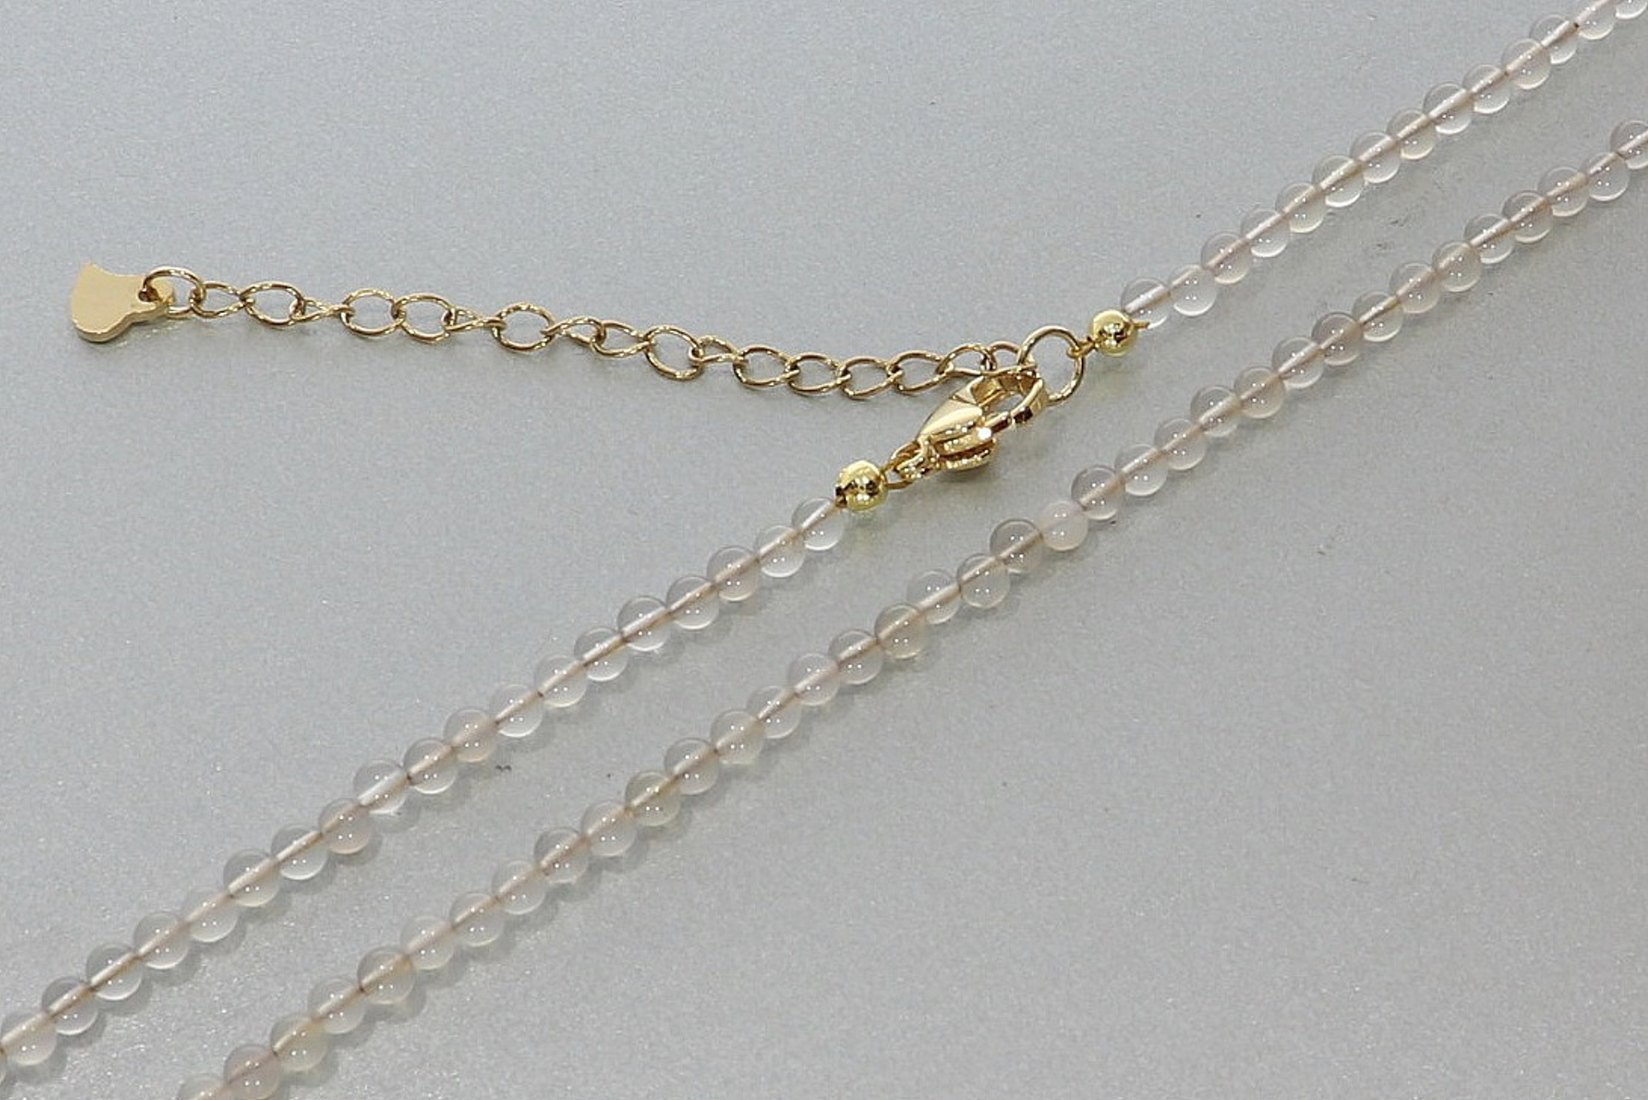 Achat grau Kugel Halskette Gold farben 3mm - 40-45cm Kettenverlängerer KK328